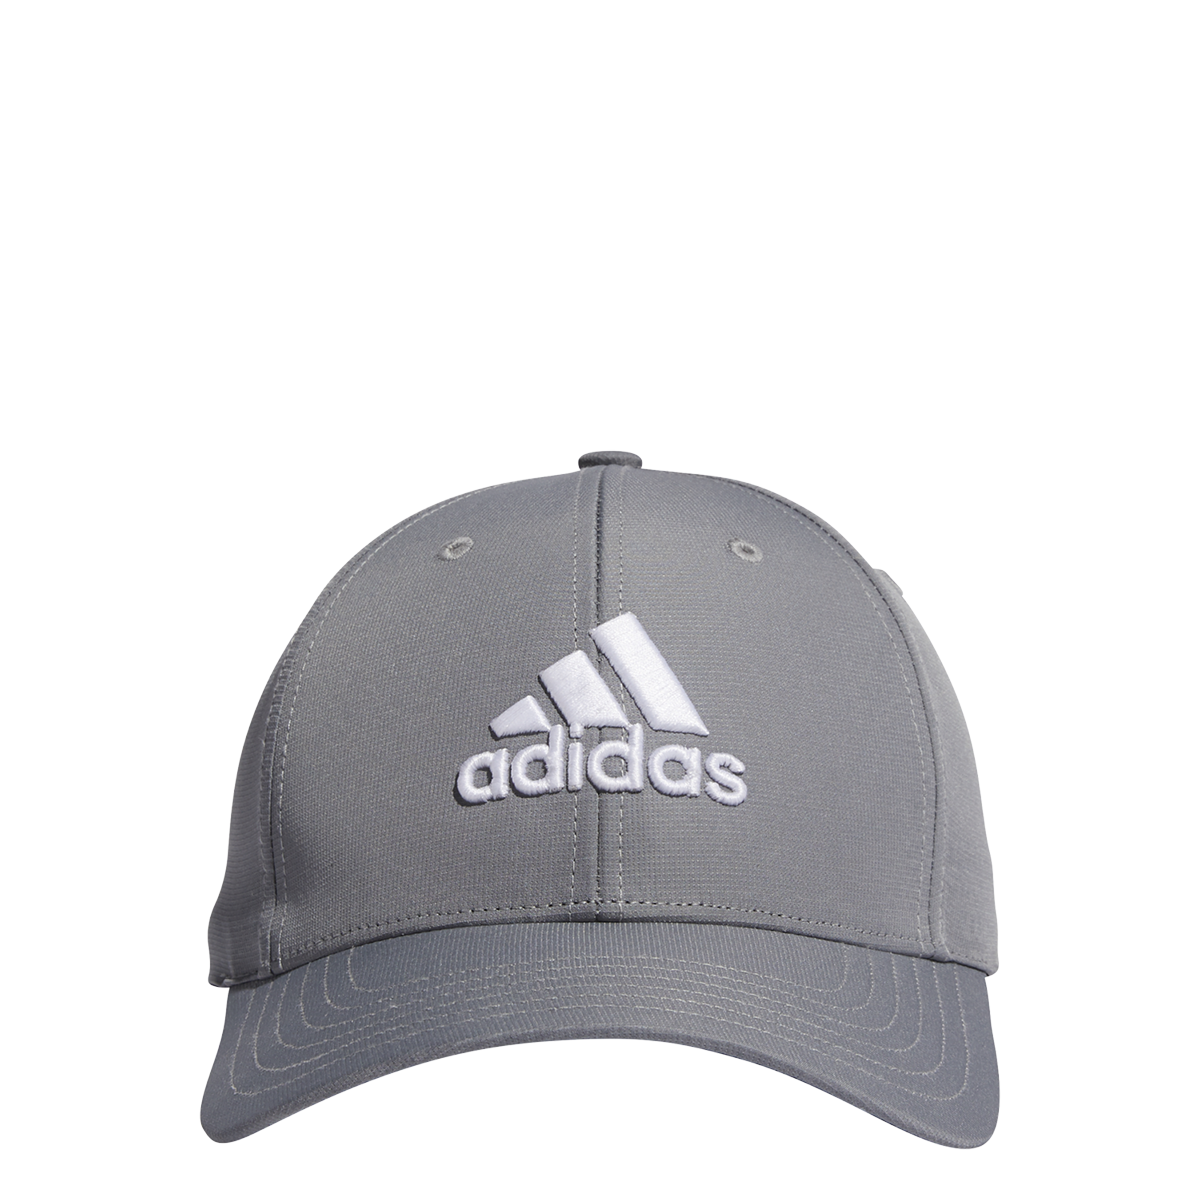 adidas performance golf hat